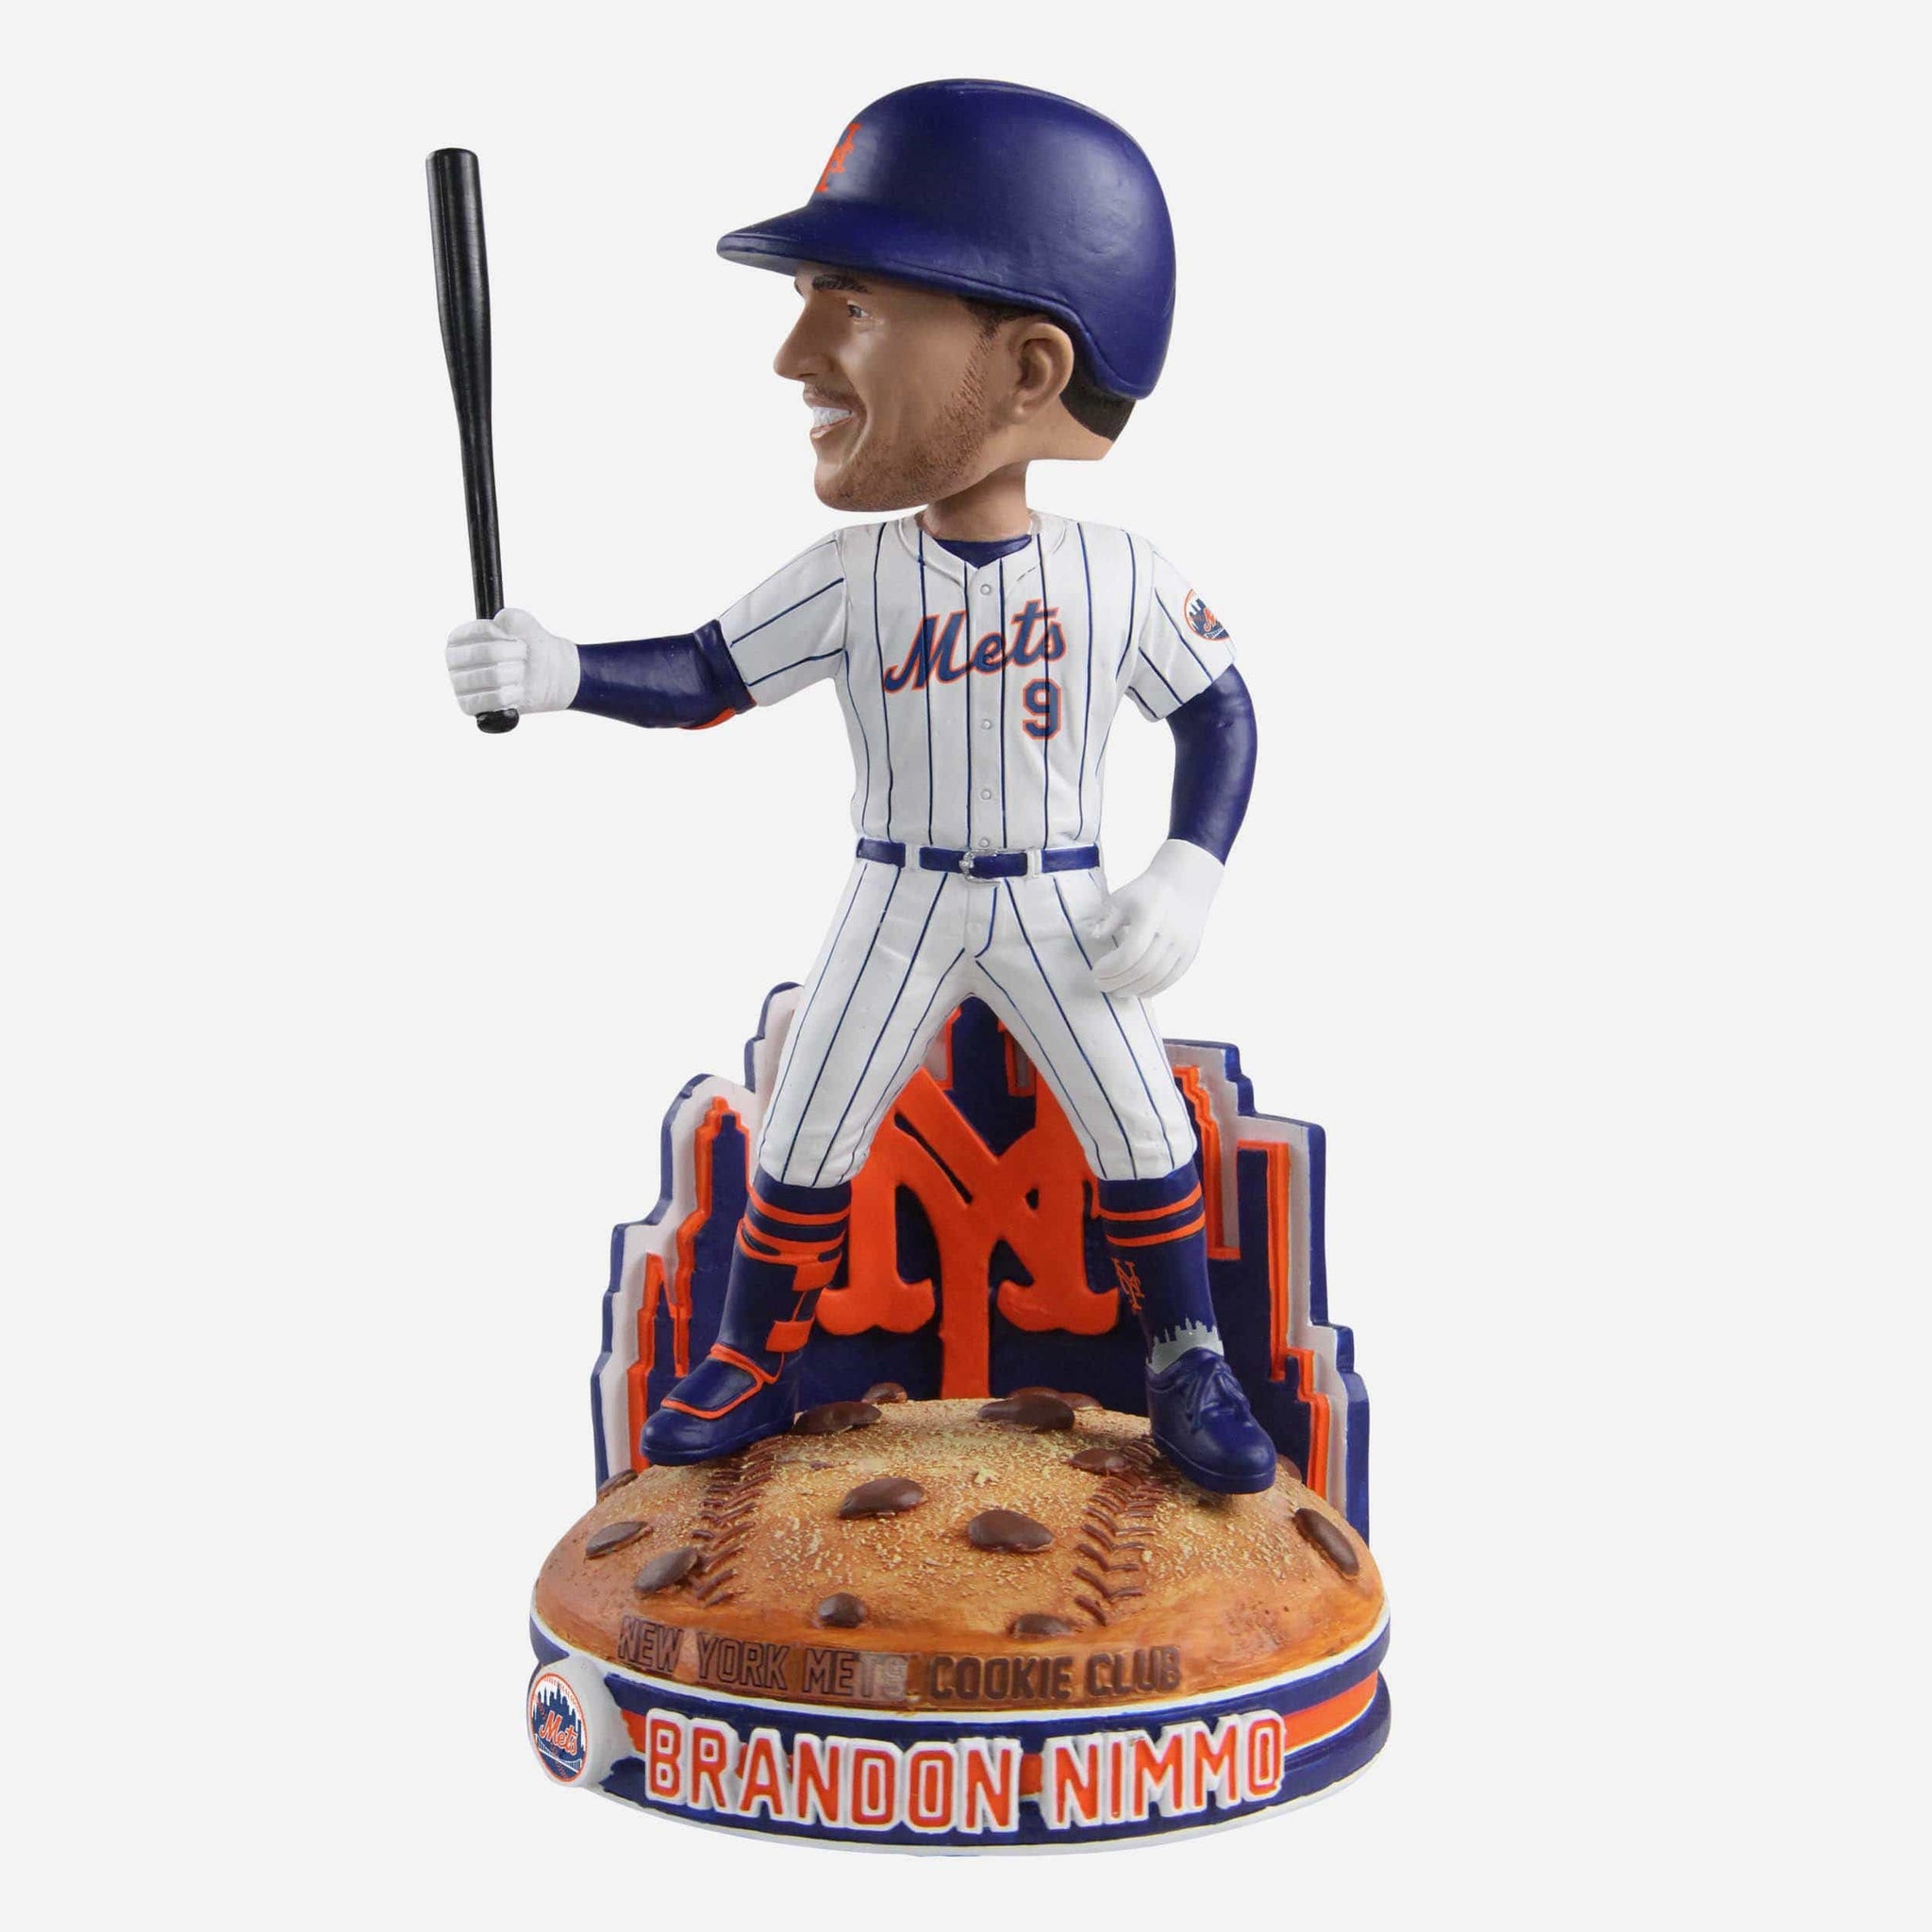 Brandon Nimmo New York Mets Cookie Club Bobblehead FOCO